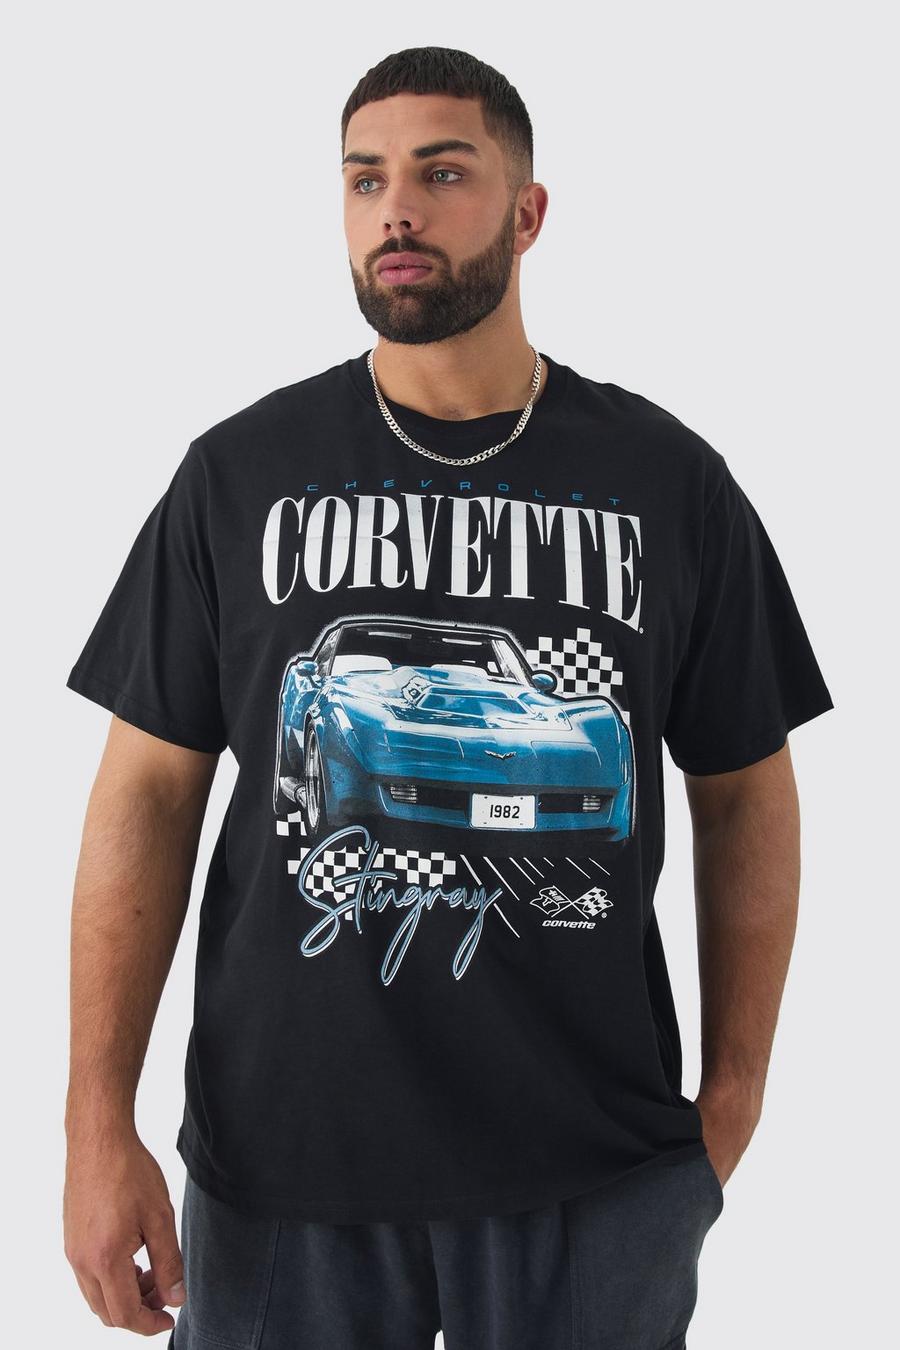 Plus Corvette Printed Licensed T-shirt In Black image number 1